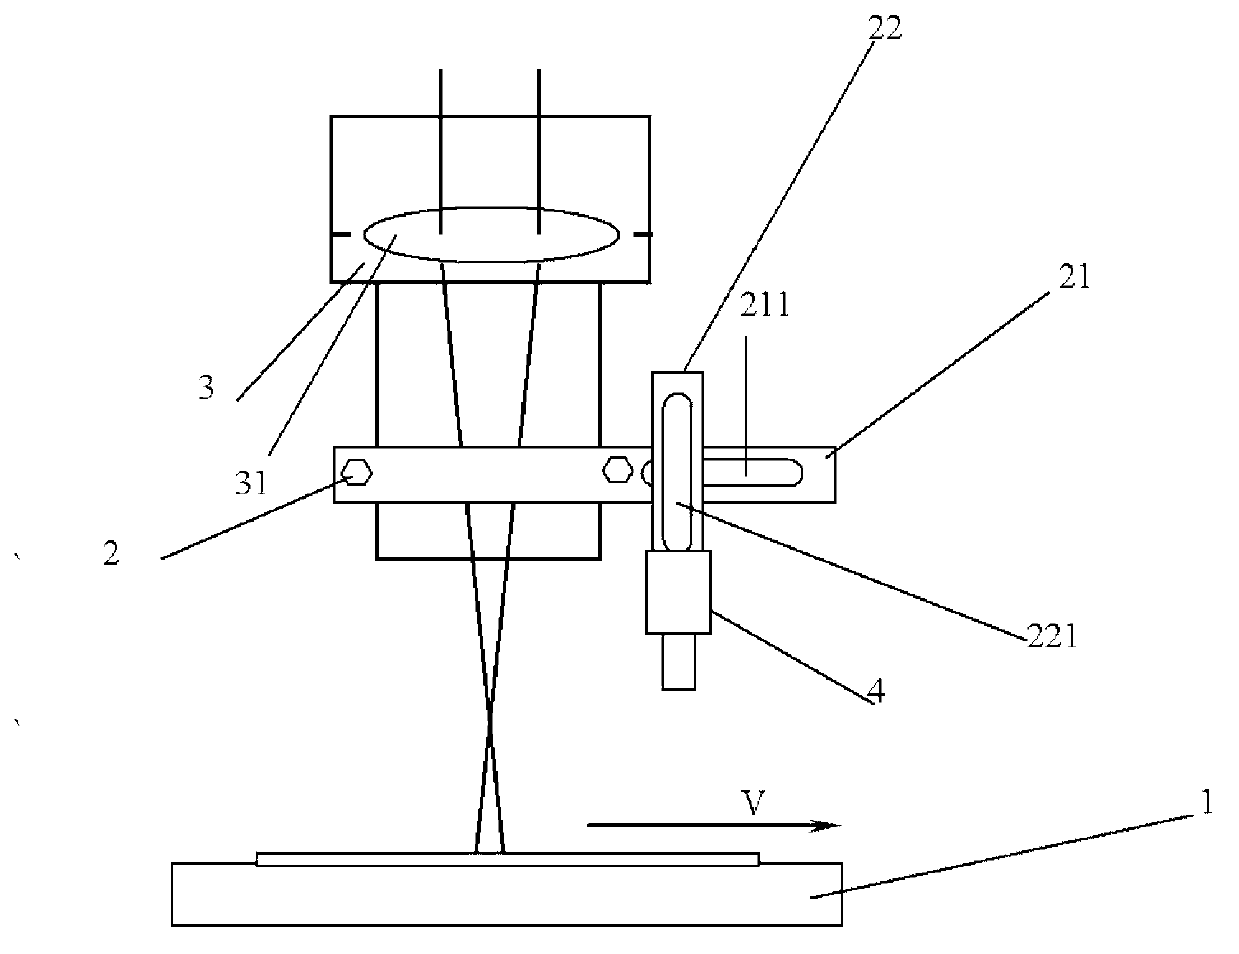 Laser machining device based on ultrasonic location and machining method